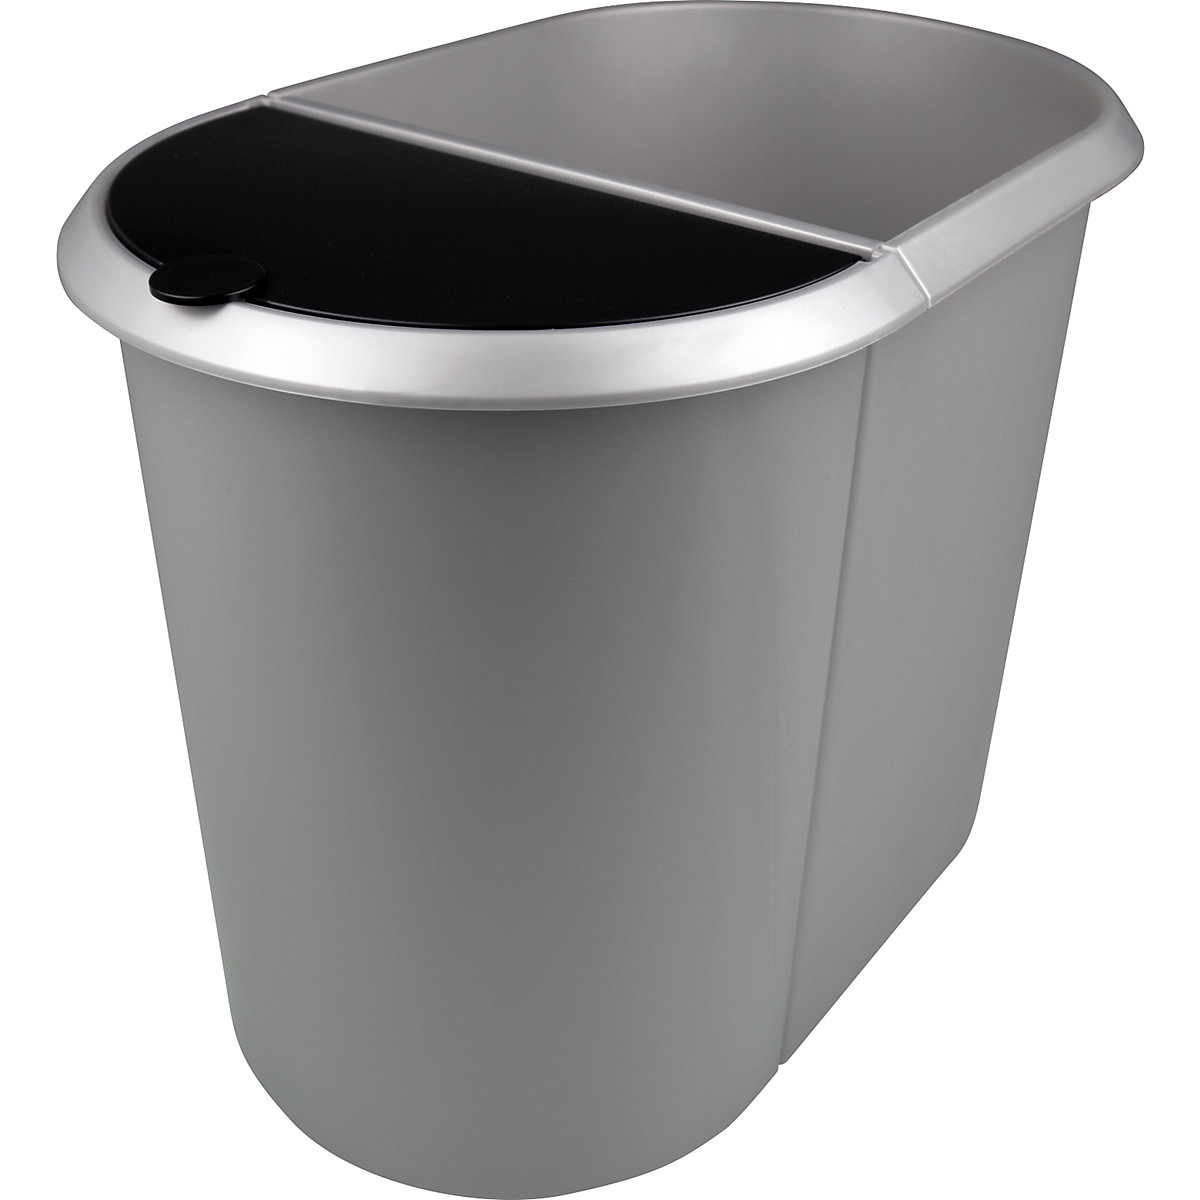 helit – Waste bin system, DUO, black lid, silver body, pack of 2